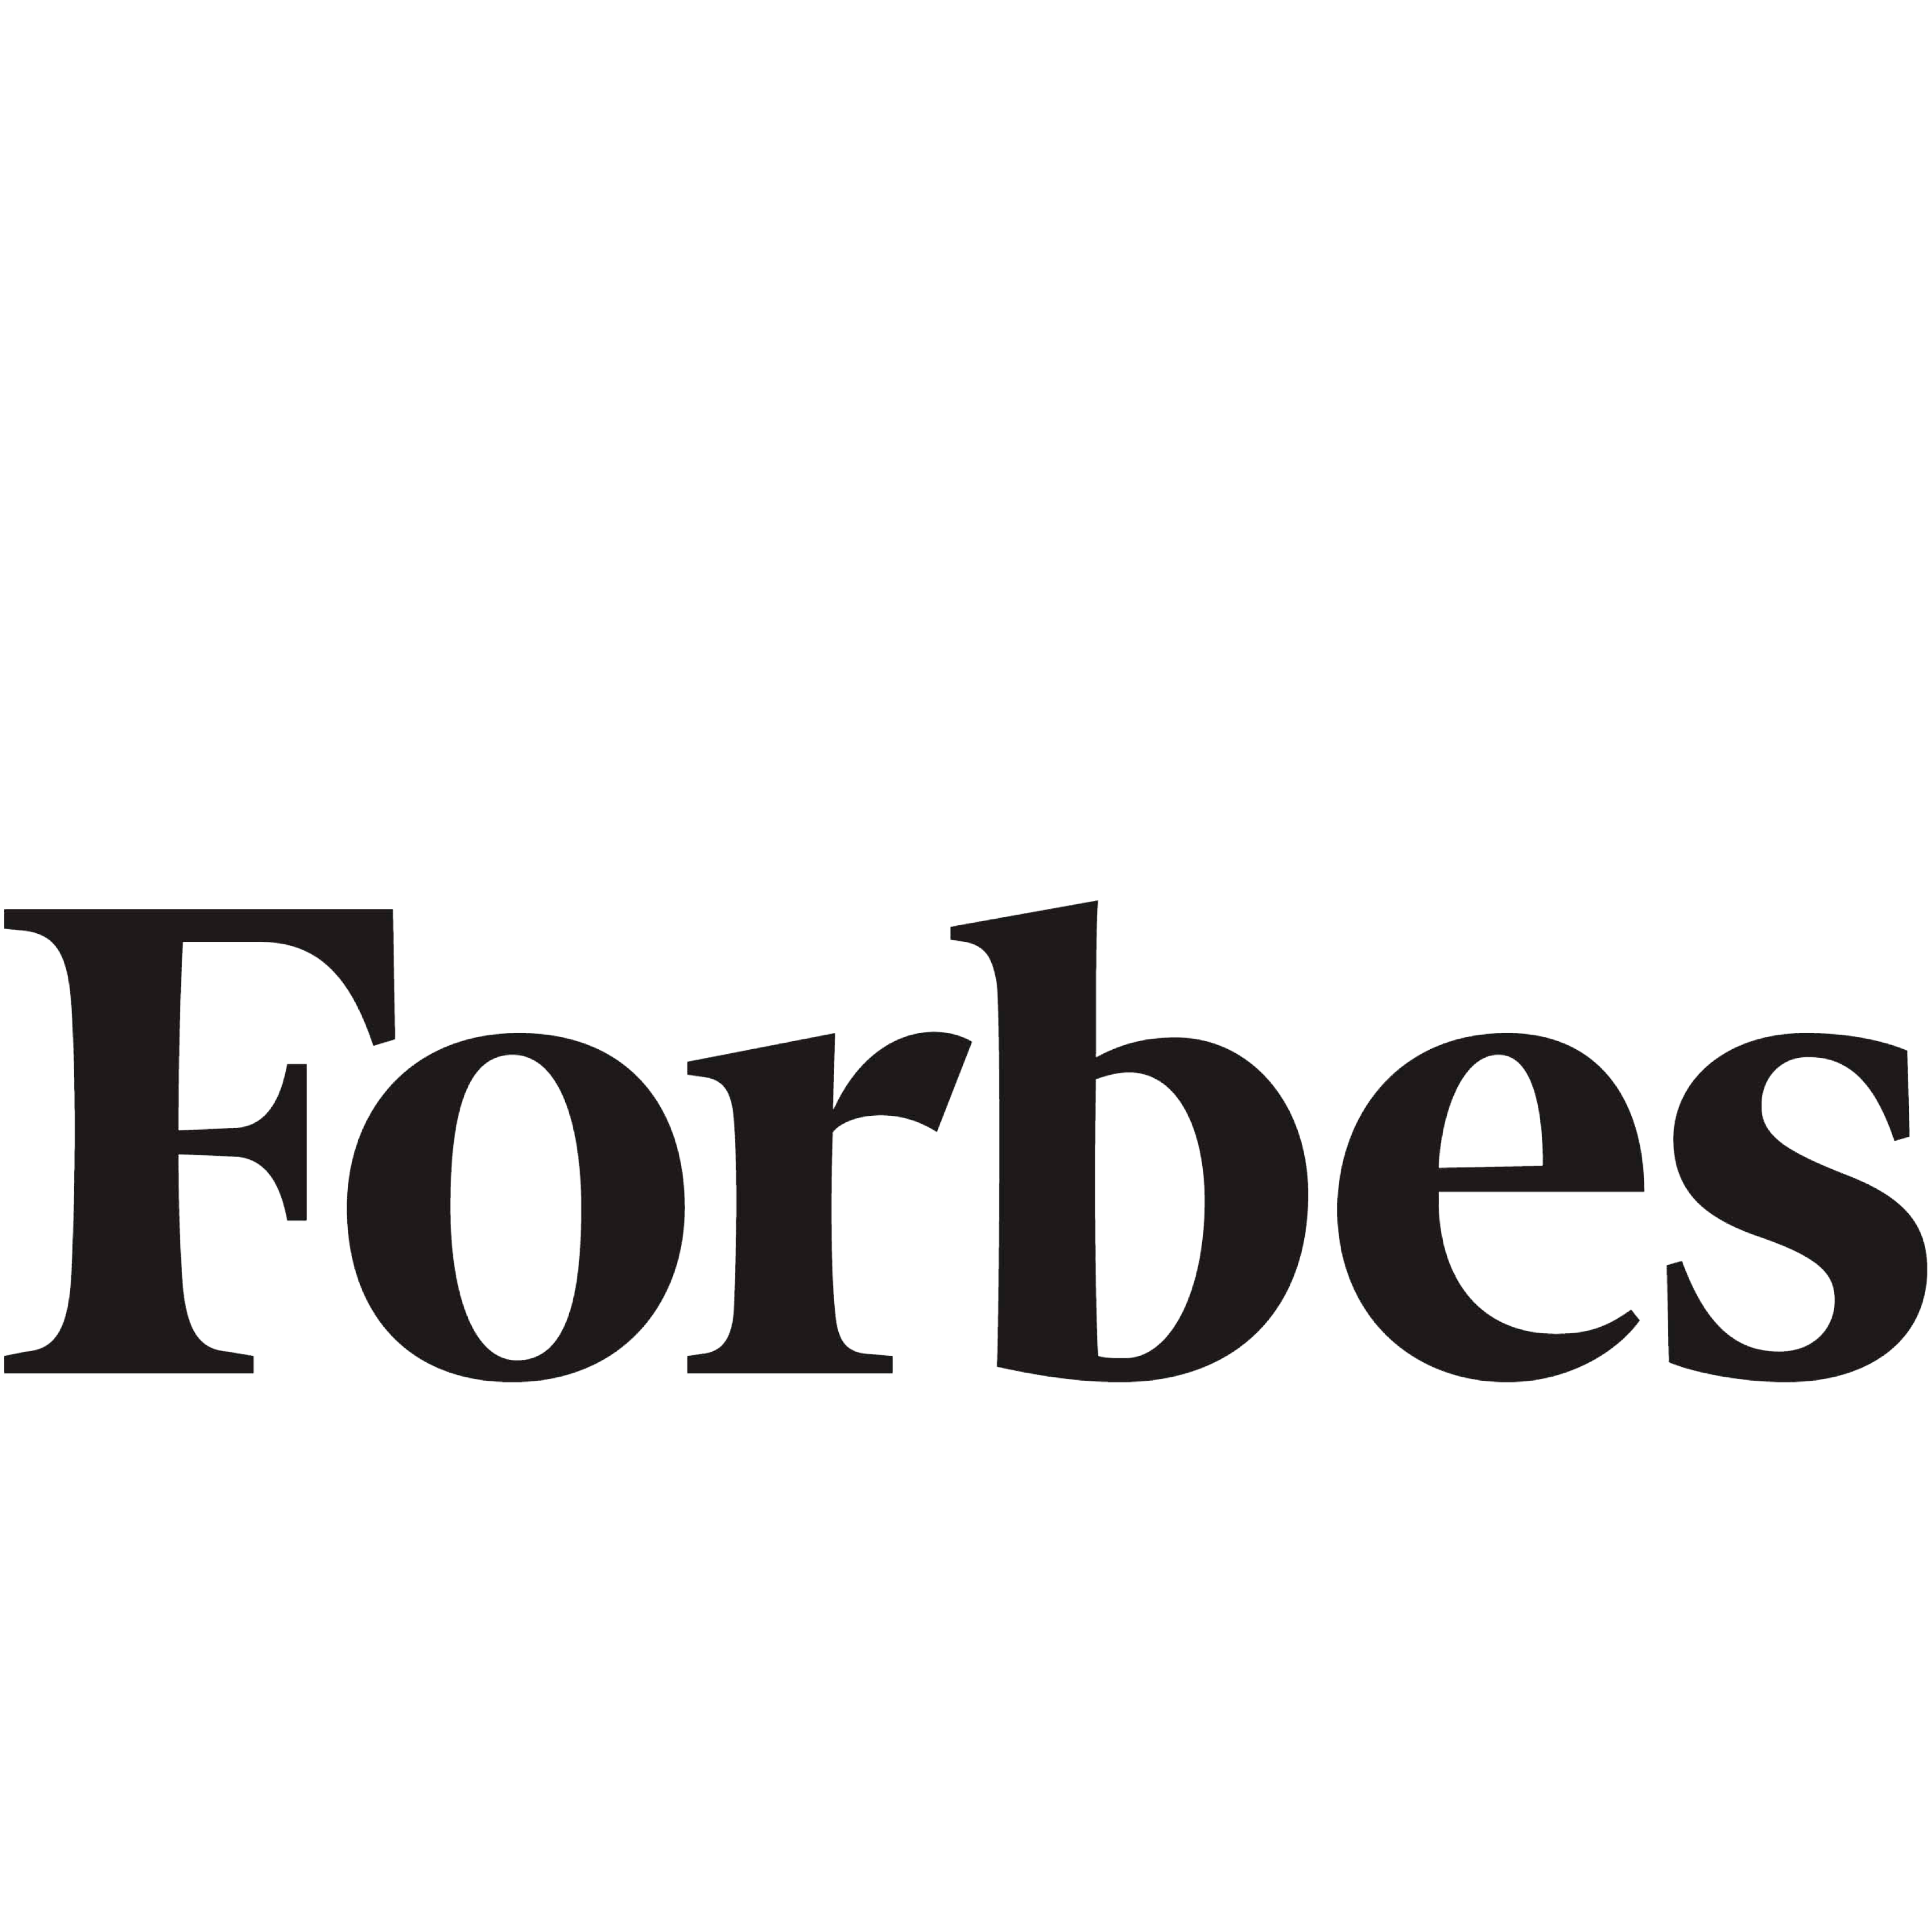 Forbes-Black-Logo-PNG-03003